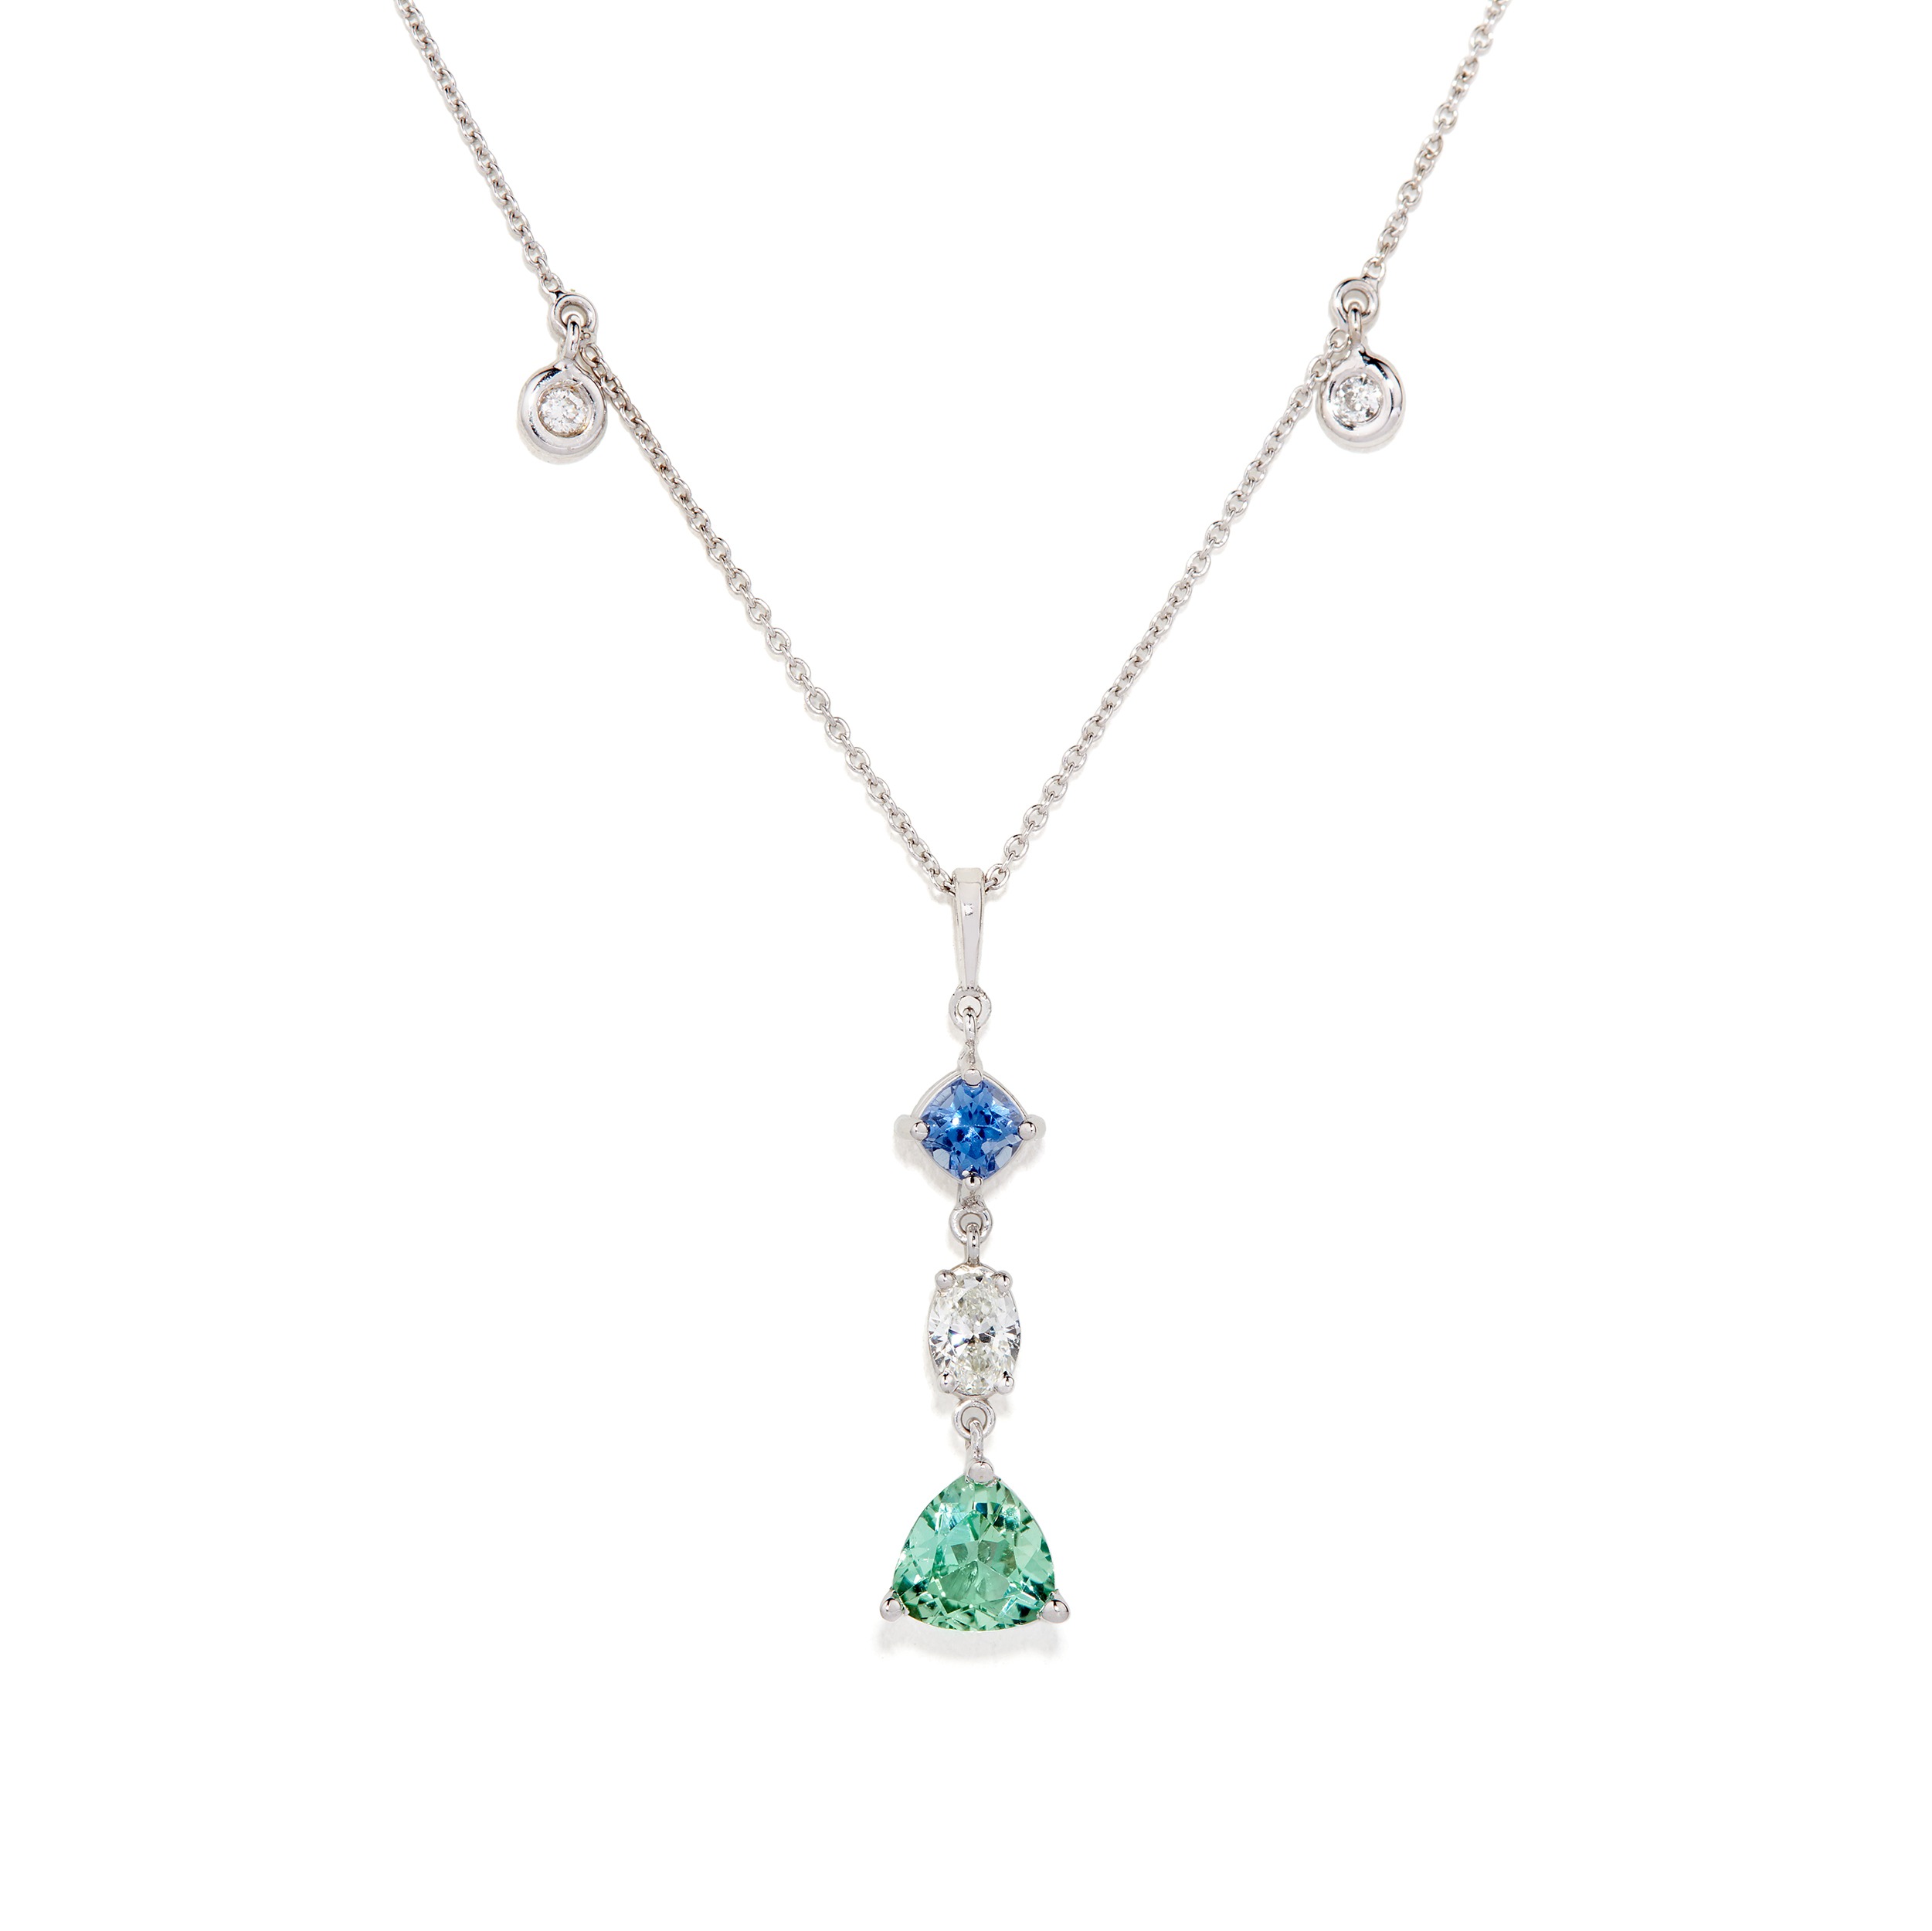 2.65 Carats of Tourmaline, Sapphire, and Diamond Necklace in 18 Karat ...